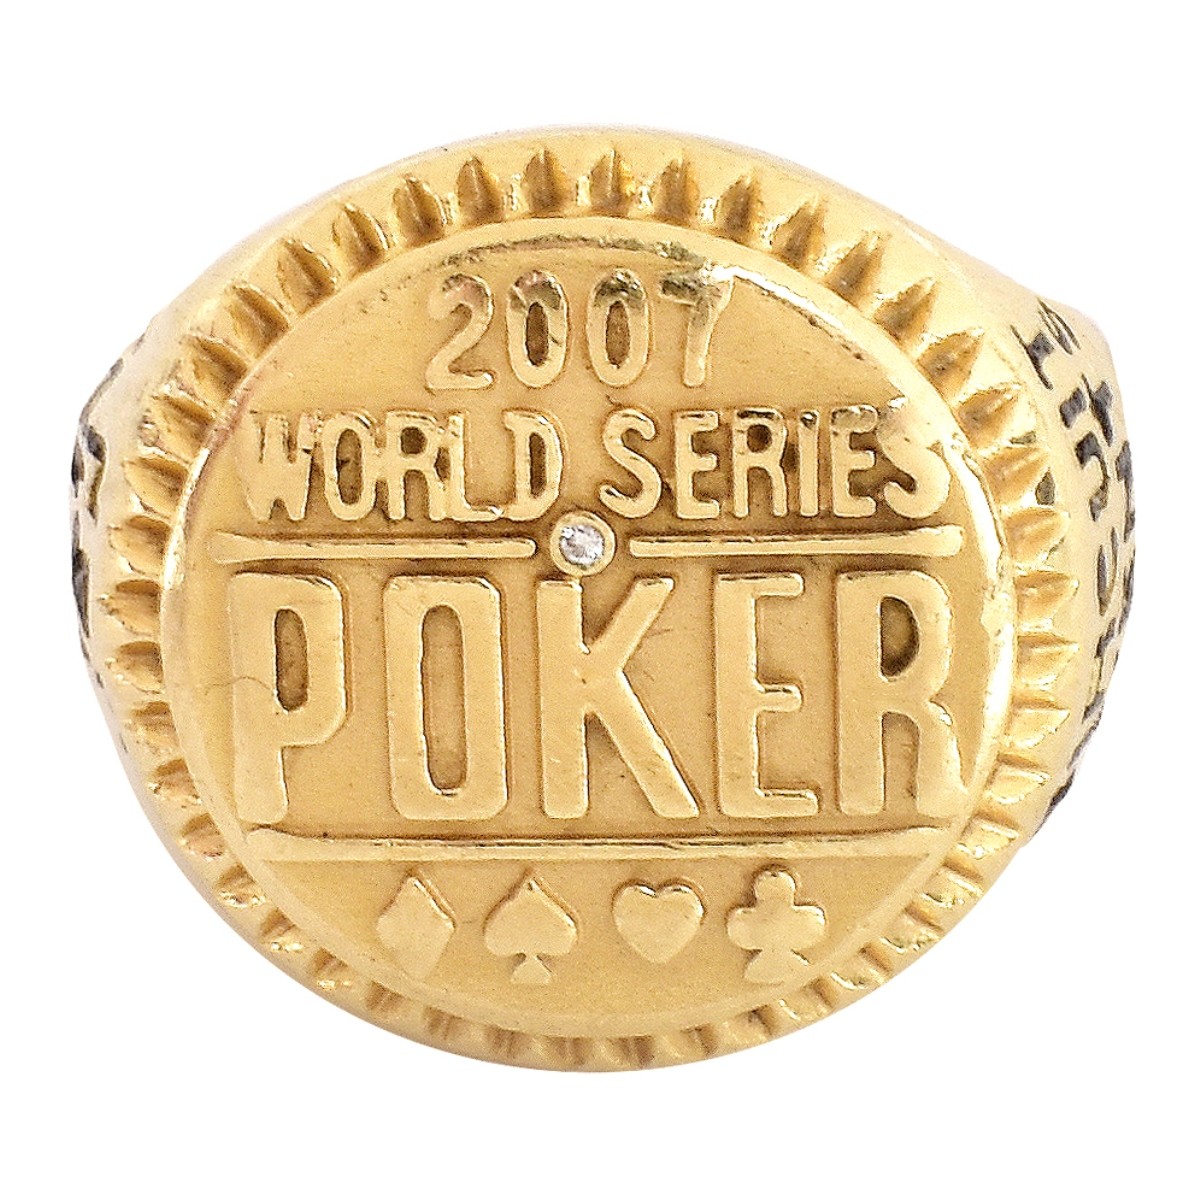 Man's 14K Gold World Series Poker Ring - Image 2 of 6